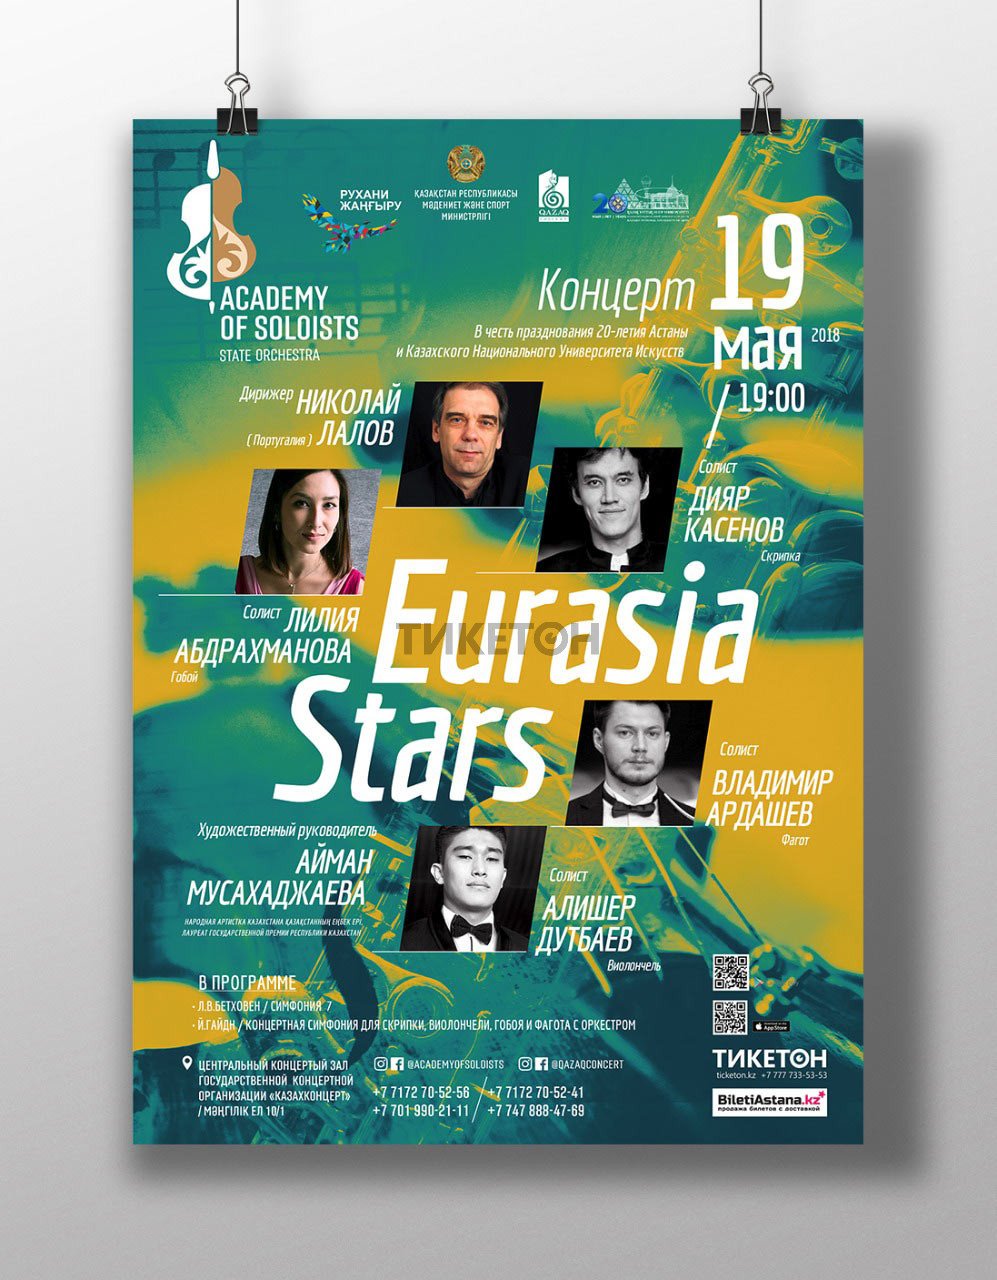 Концерт "Eurasia Stars"